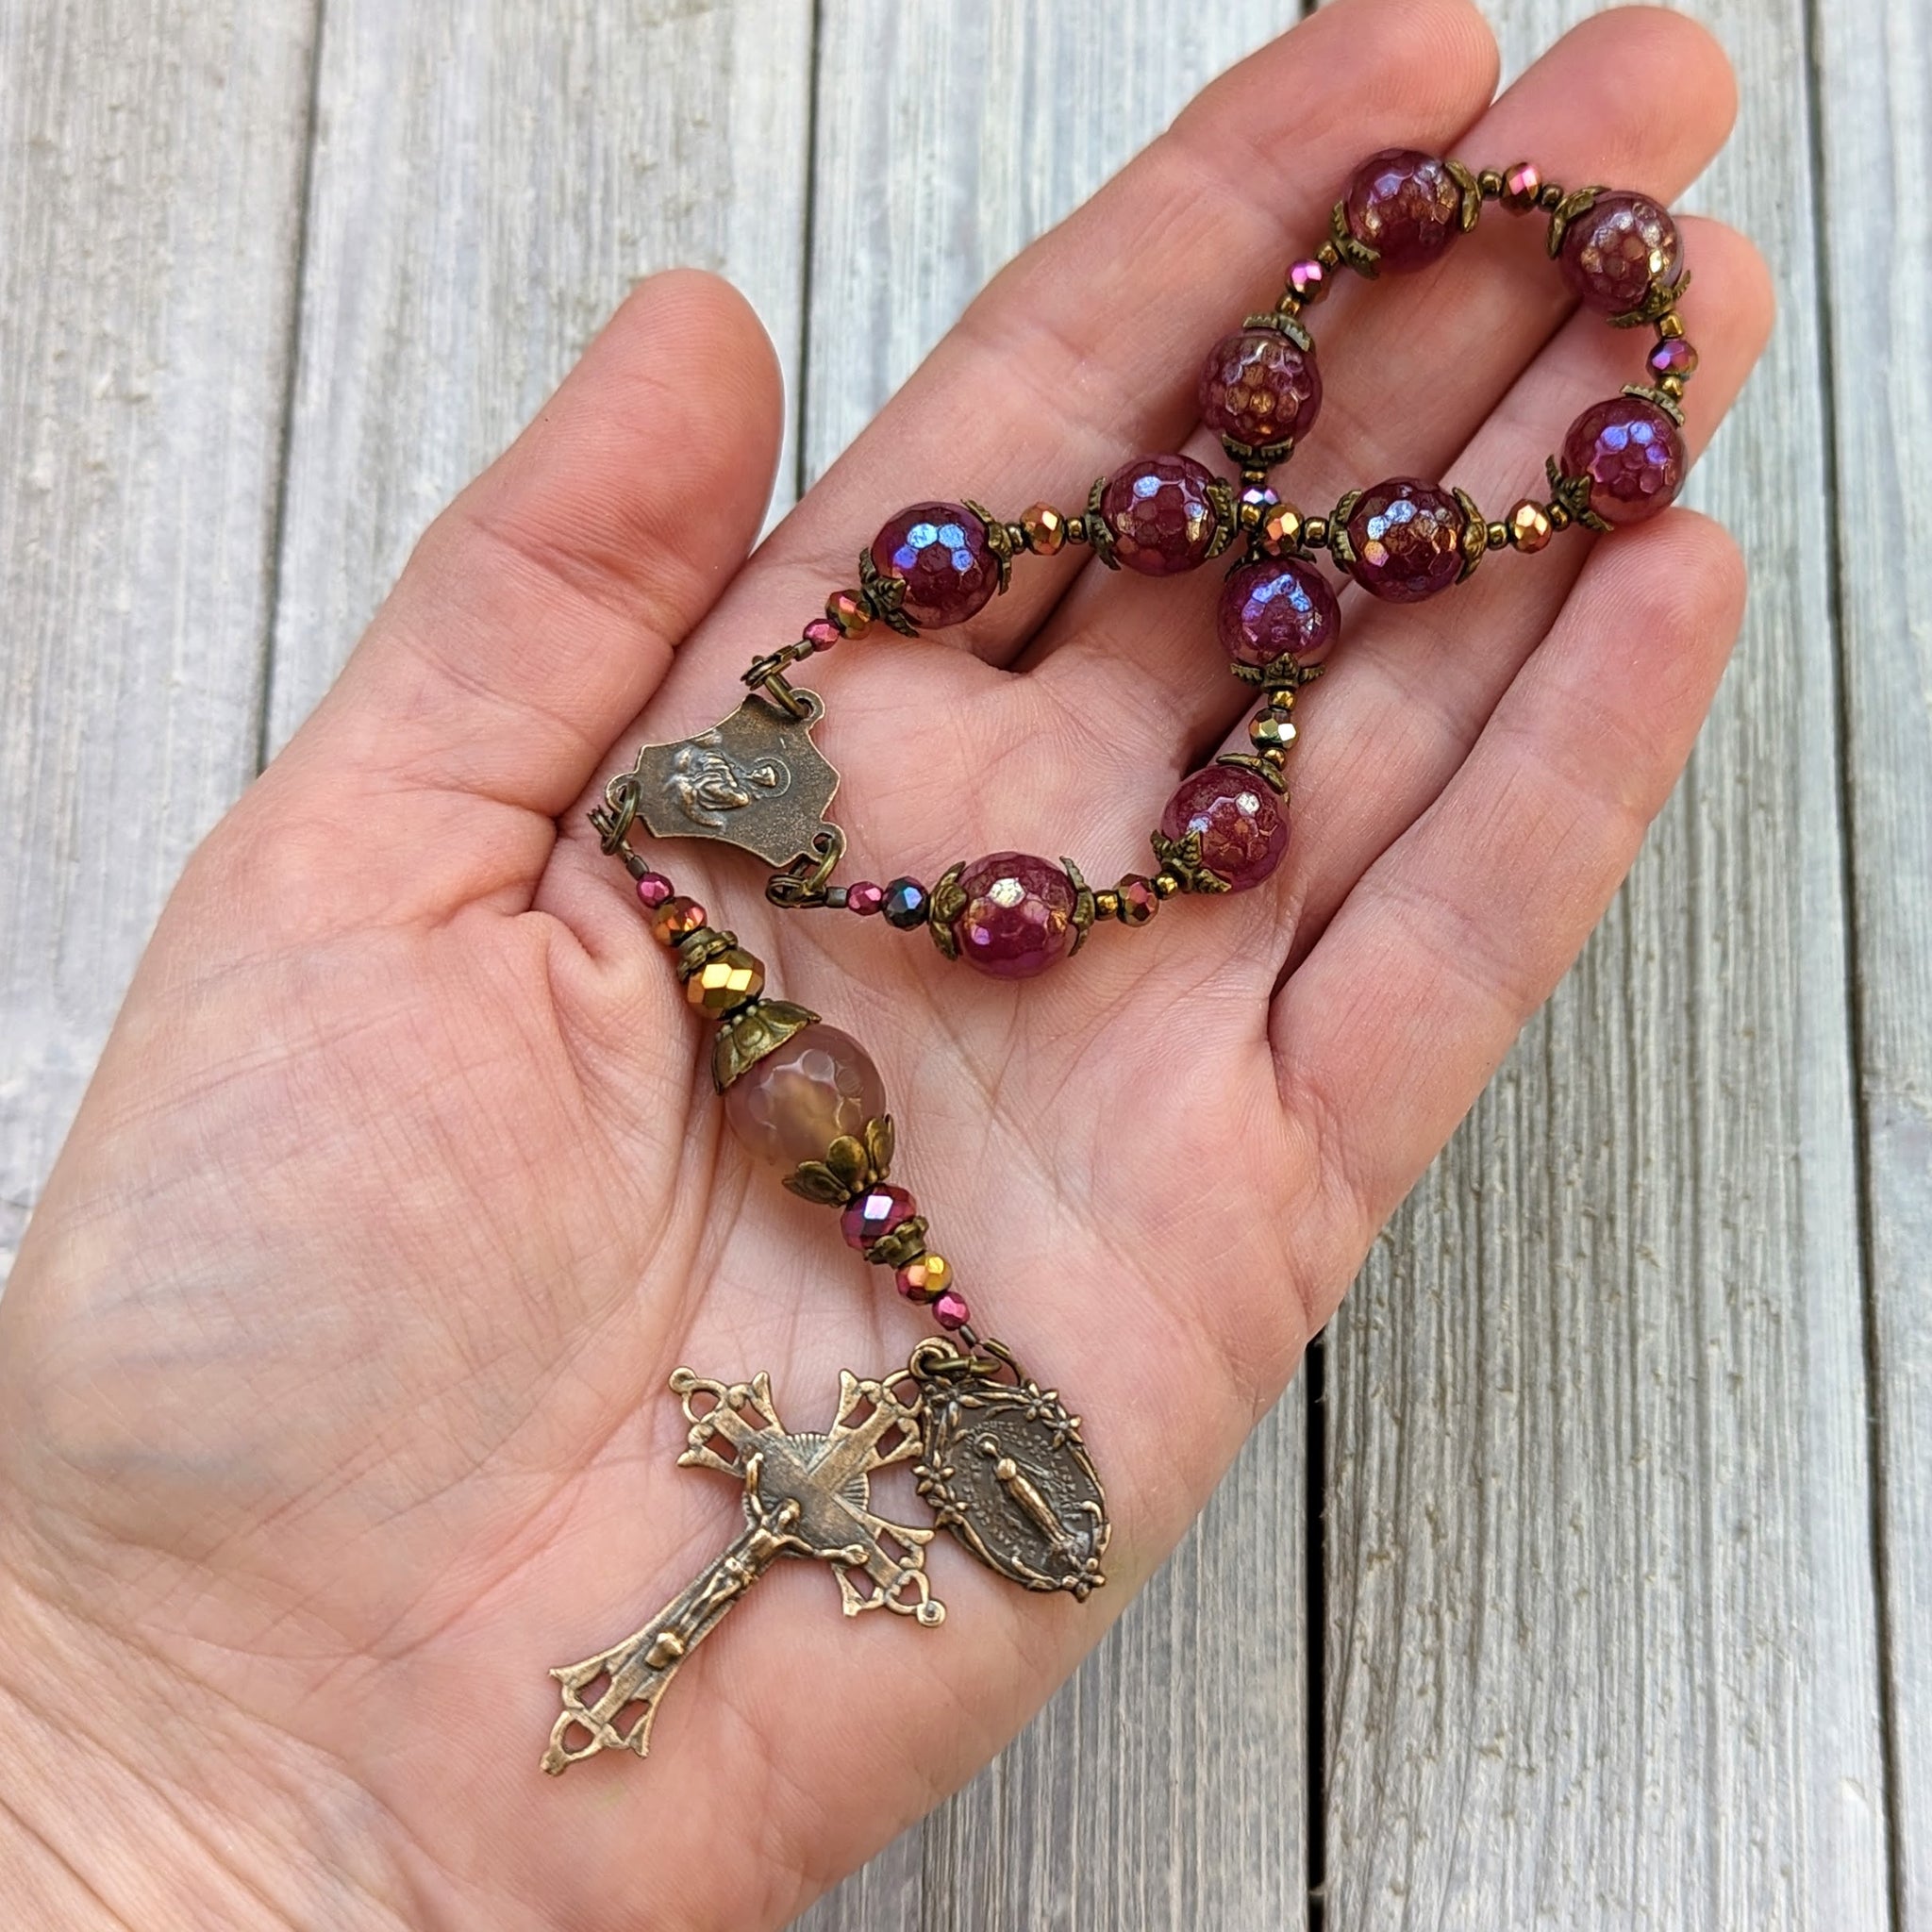 SAINT RITA OF CASCIA Single Decade True Bronze & Semi precious Quartz Rosary